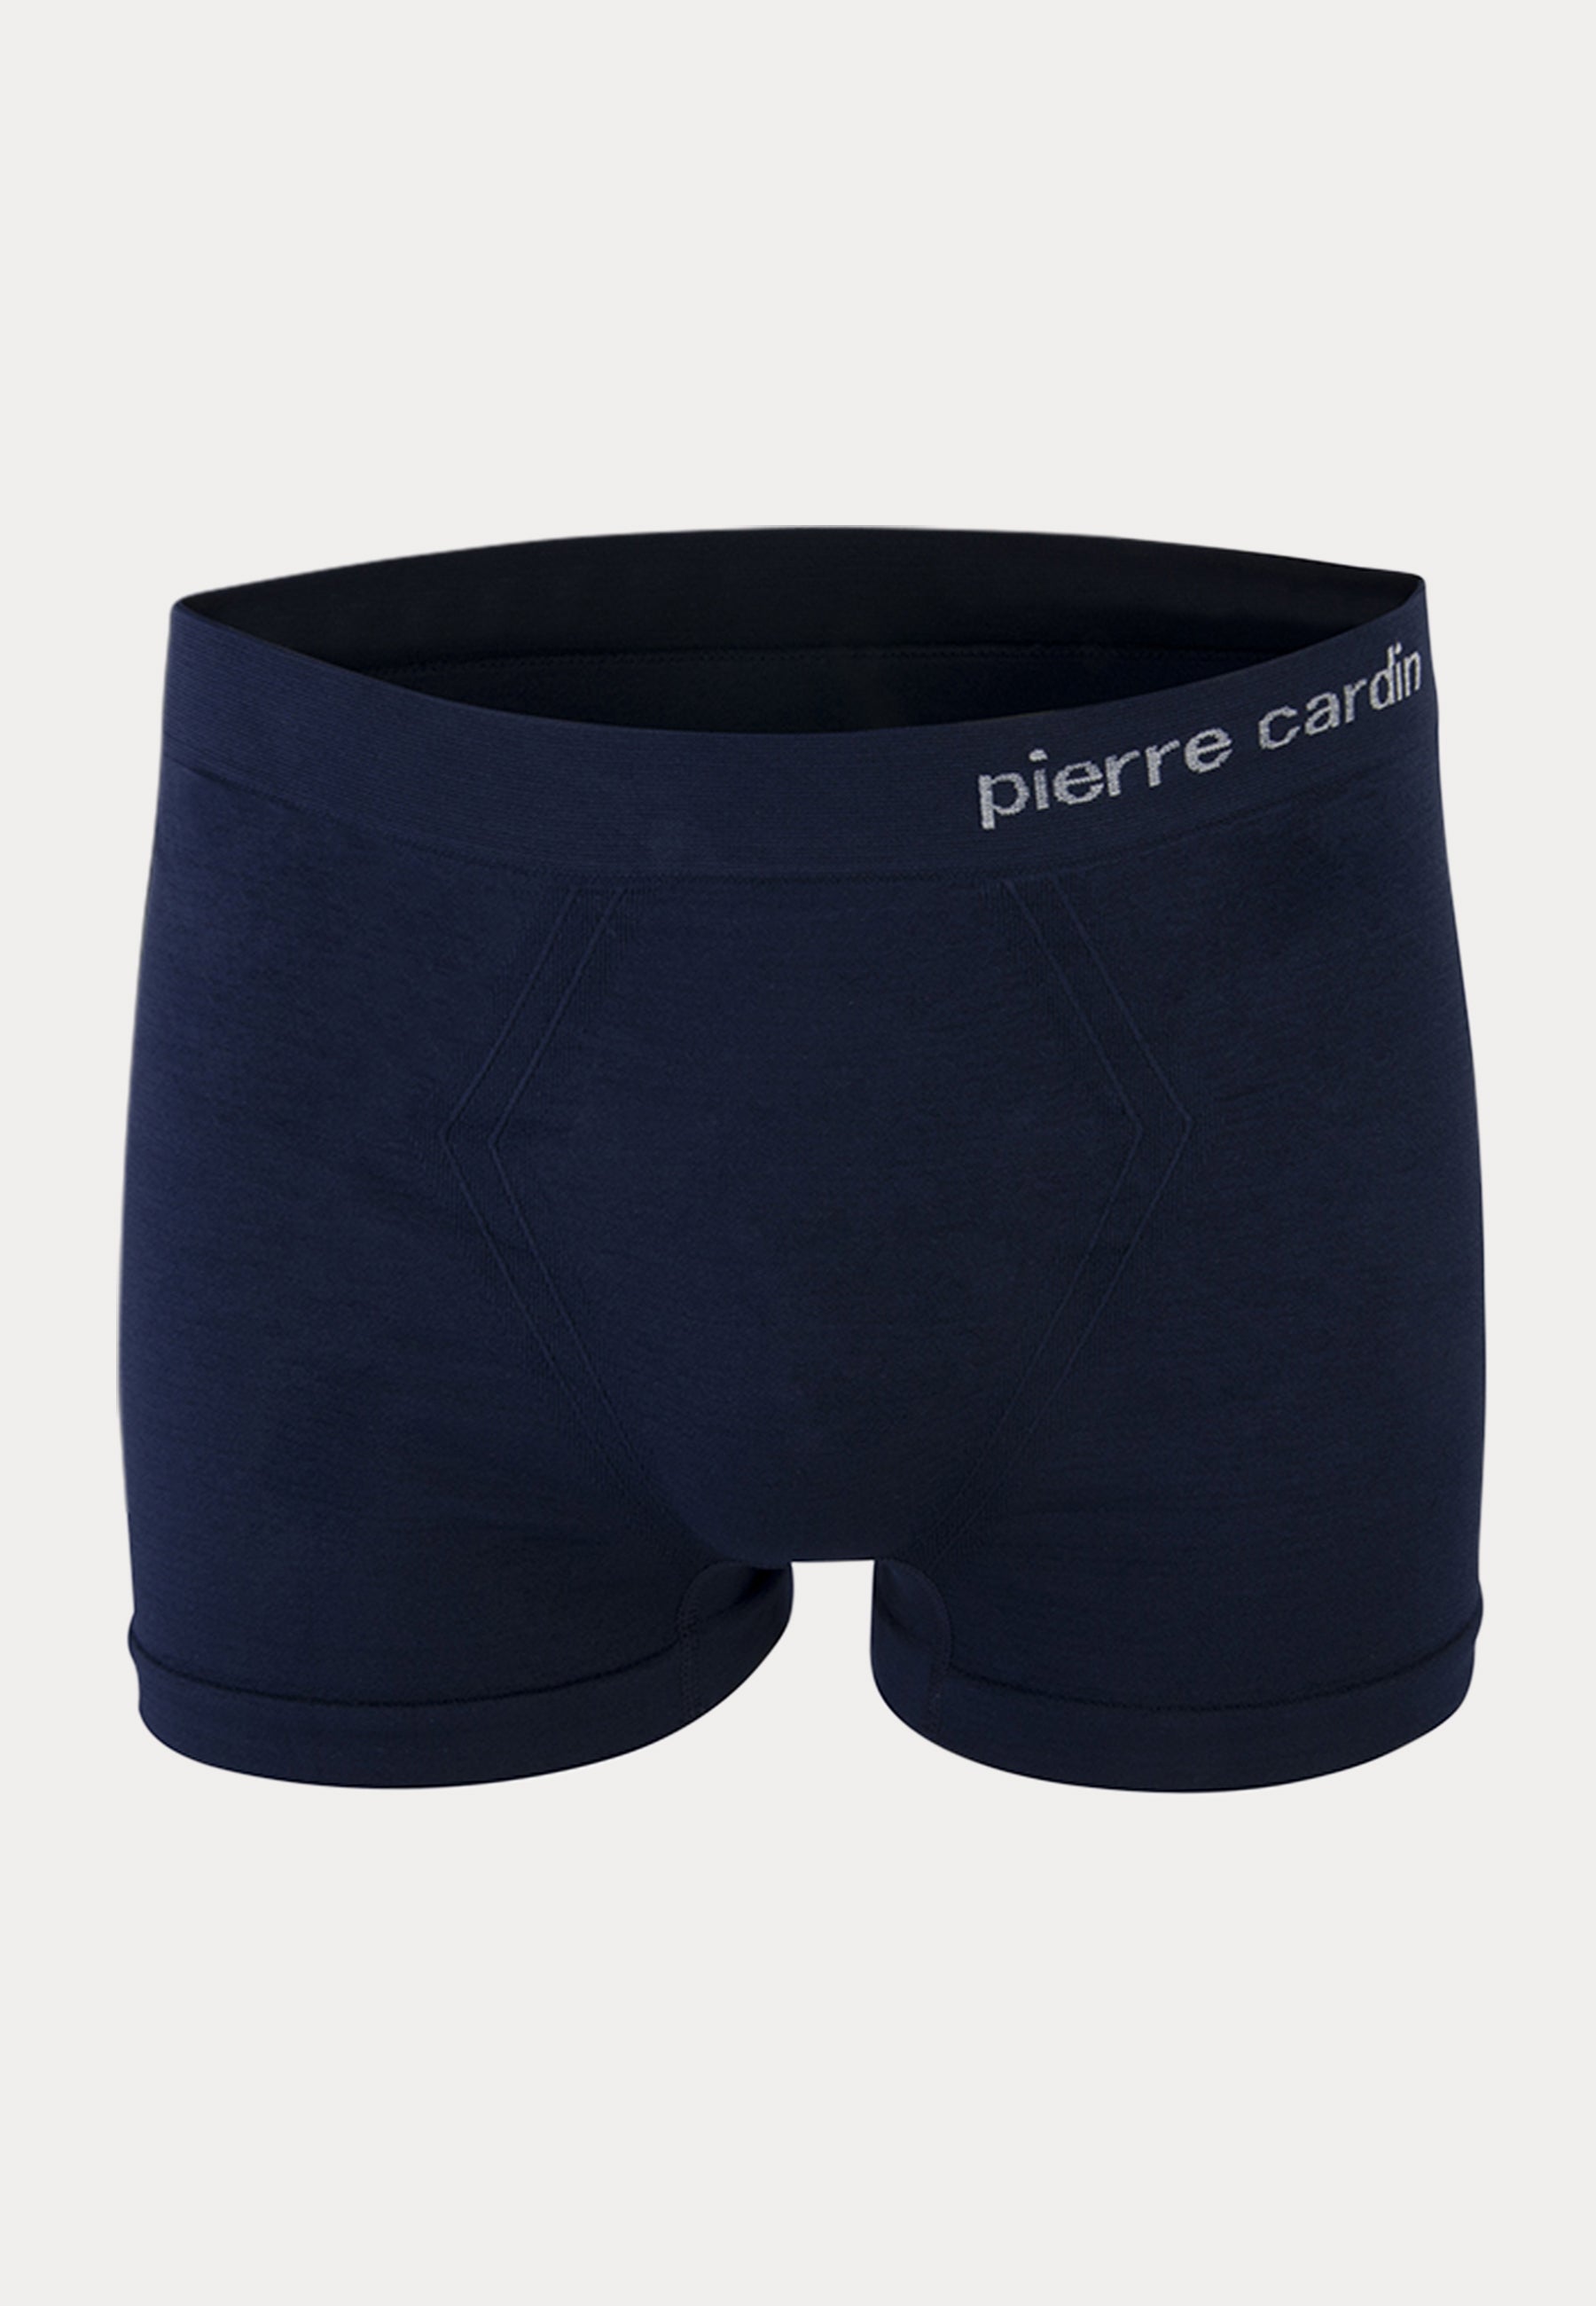 Pierre Cardin - Boxershorts - 8 Pack - Marine